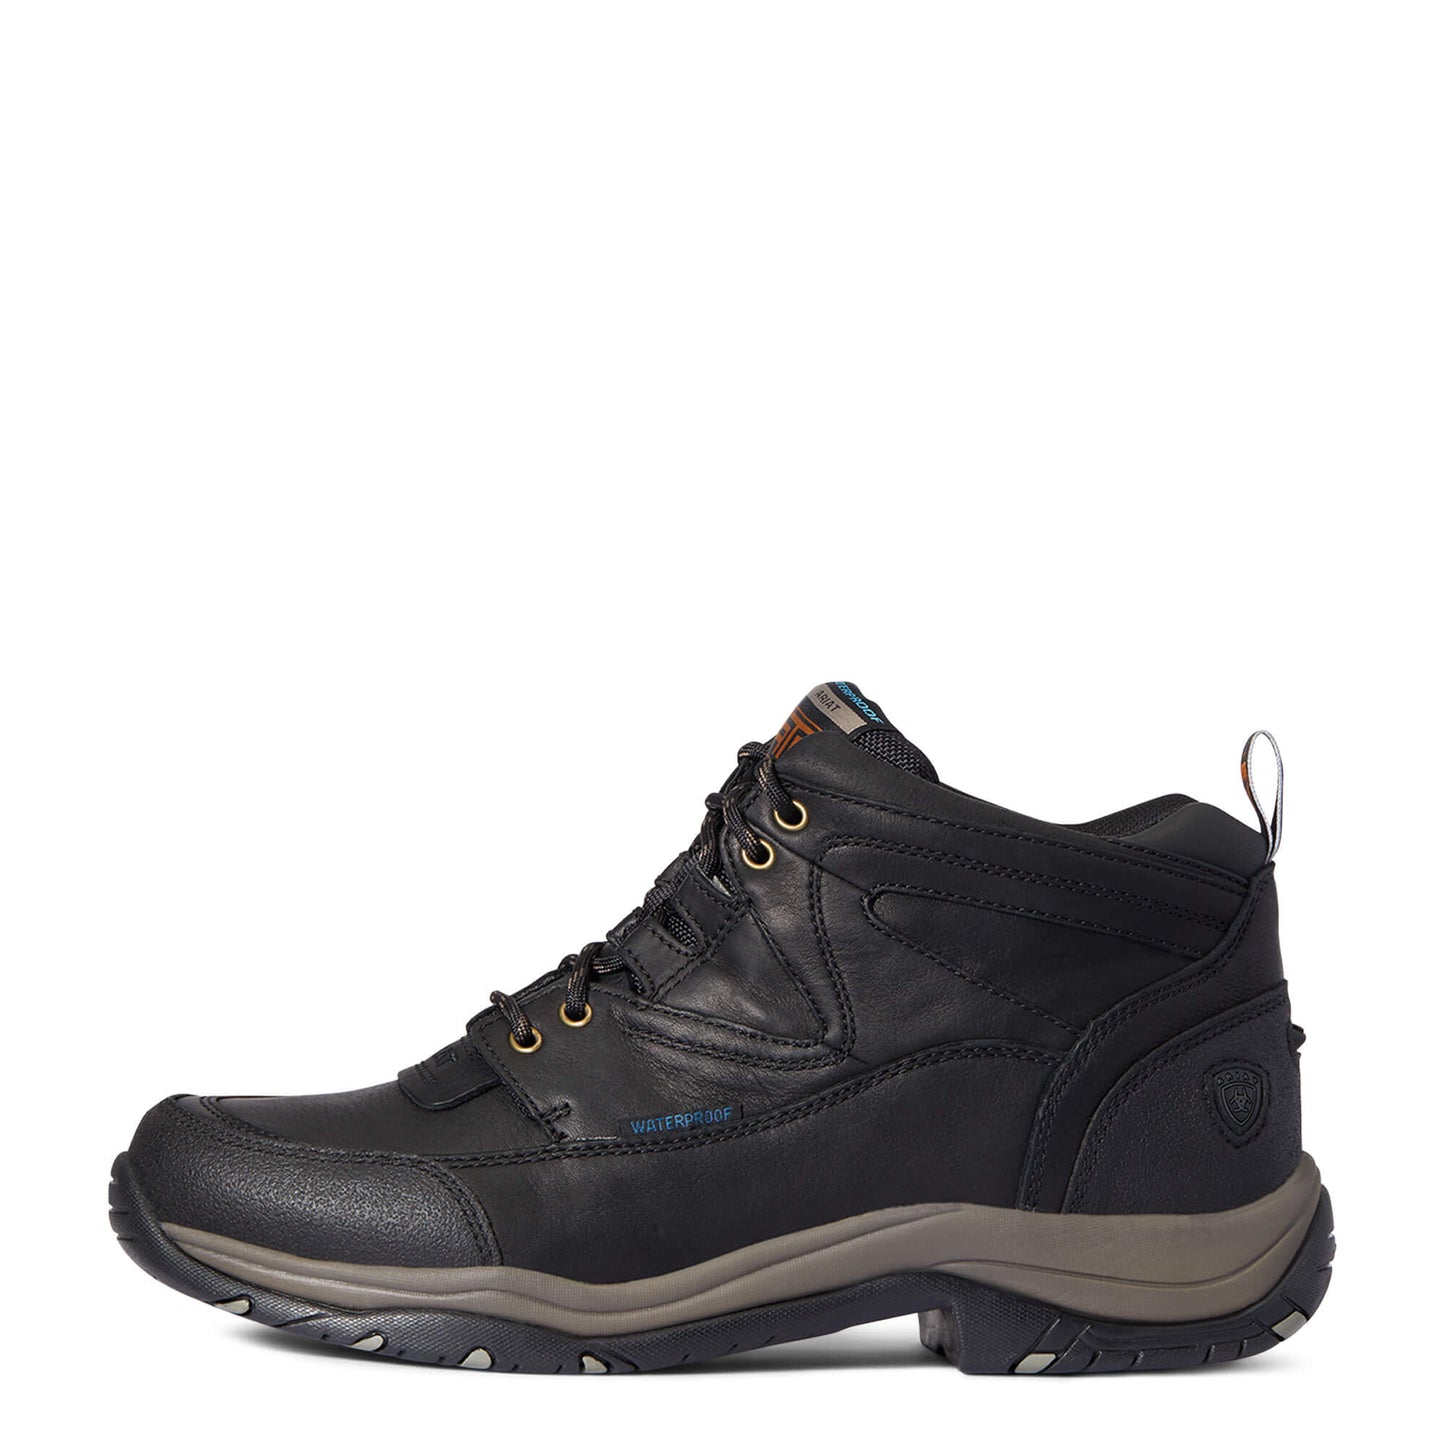 Ariat® Men's Terrain H2O Waterproof Hiking Shoes